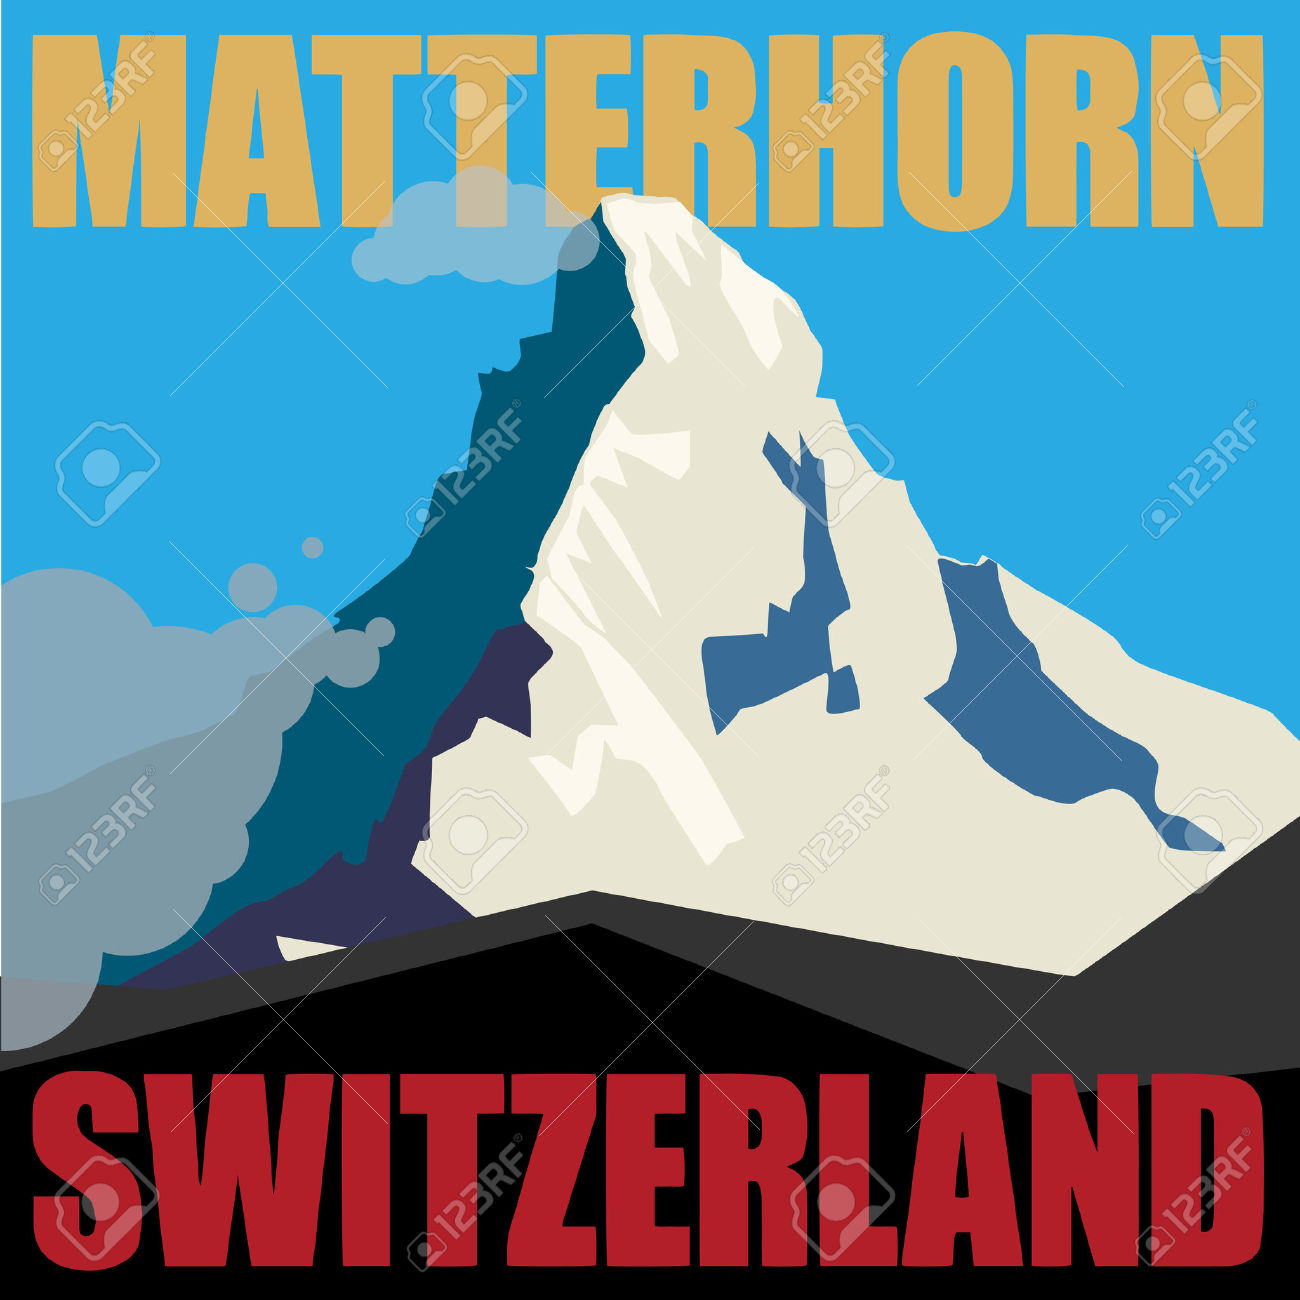 189 Matterhorn Stock Vector Illustration And Royalty Free.